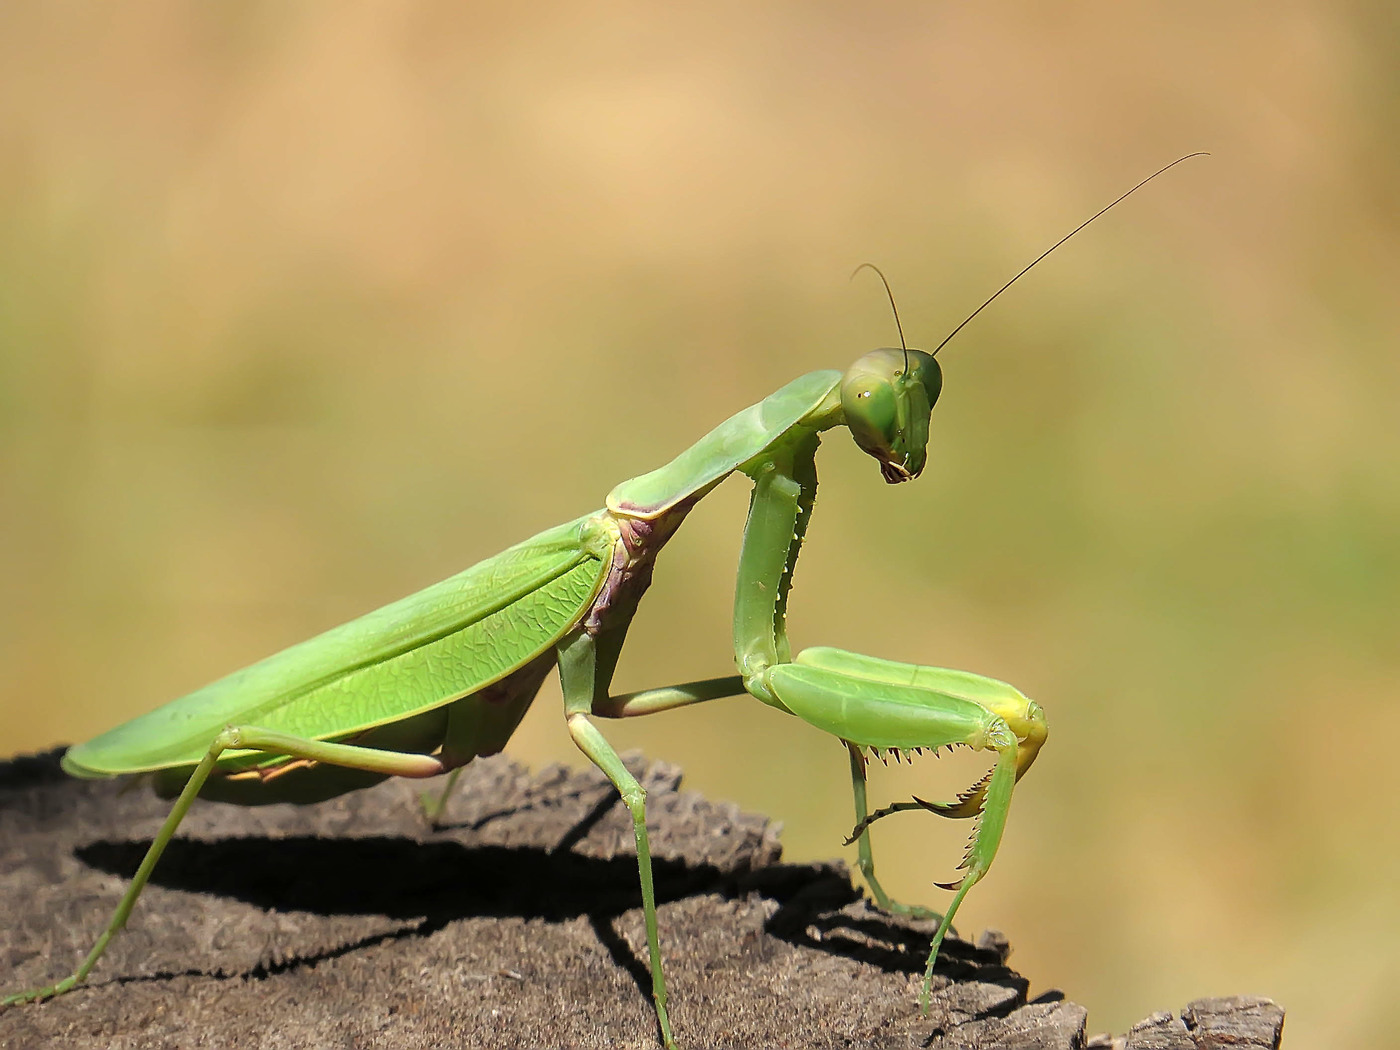 Pag-ampo sa Mantis: Closeup Photo